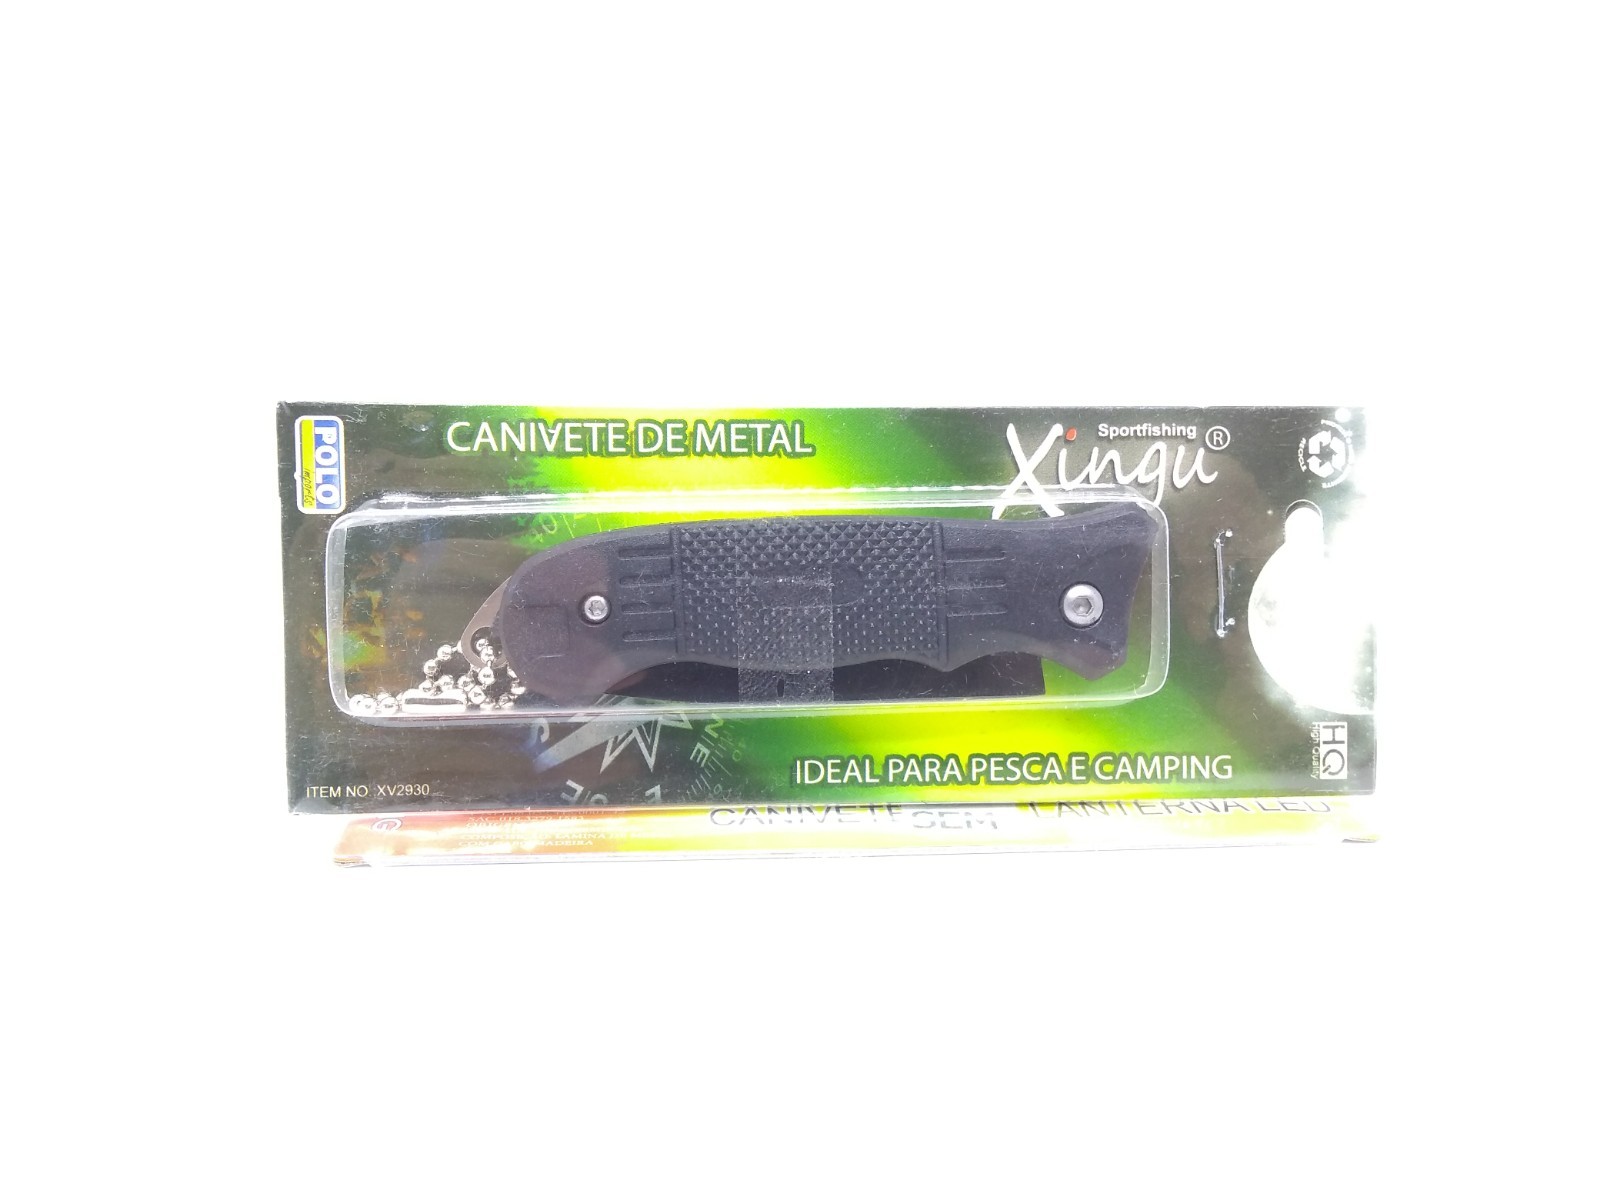 Canivete Xingu XV2930 - Cabo Preto - Life Pesca - Sua loja de Pesca, Camping e Lazer